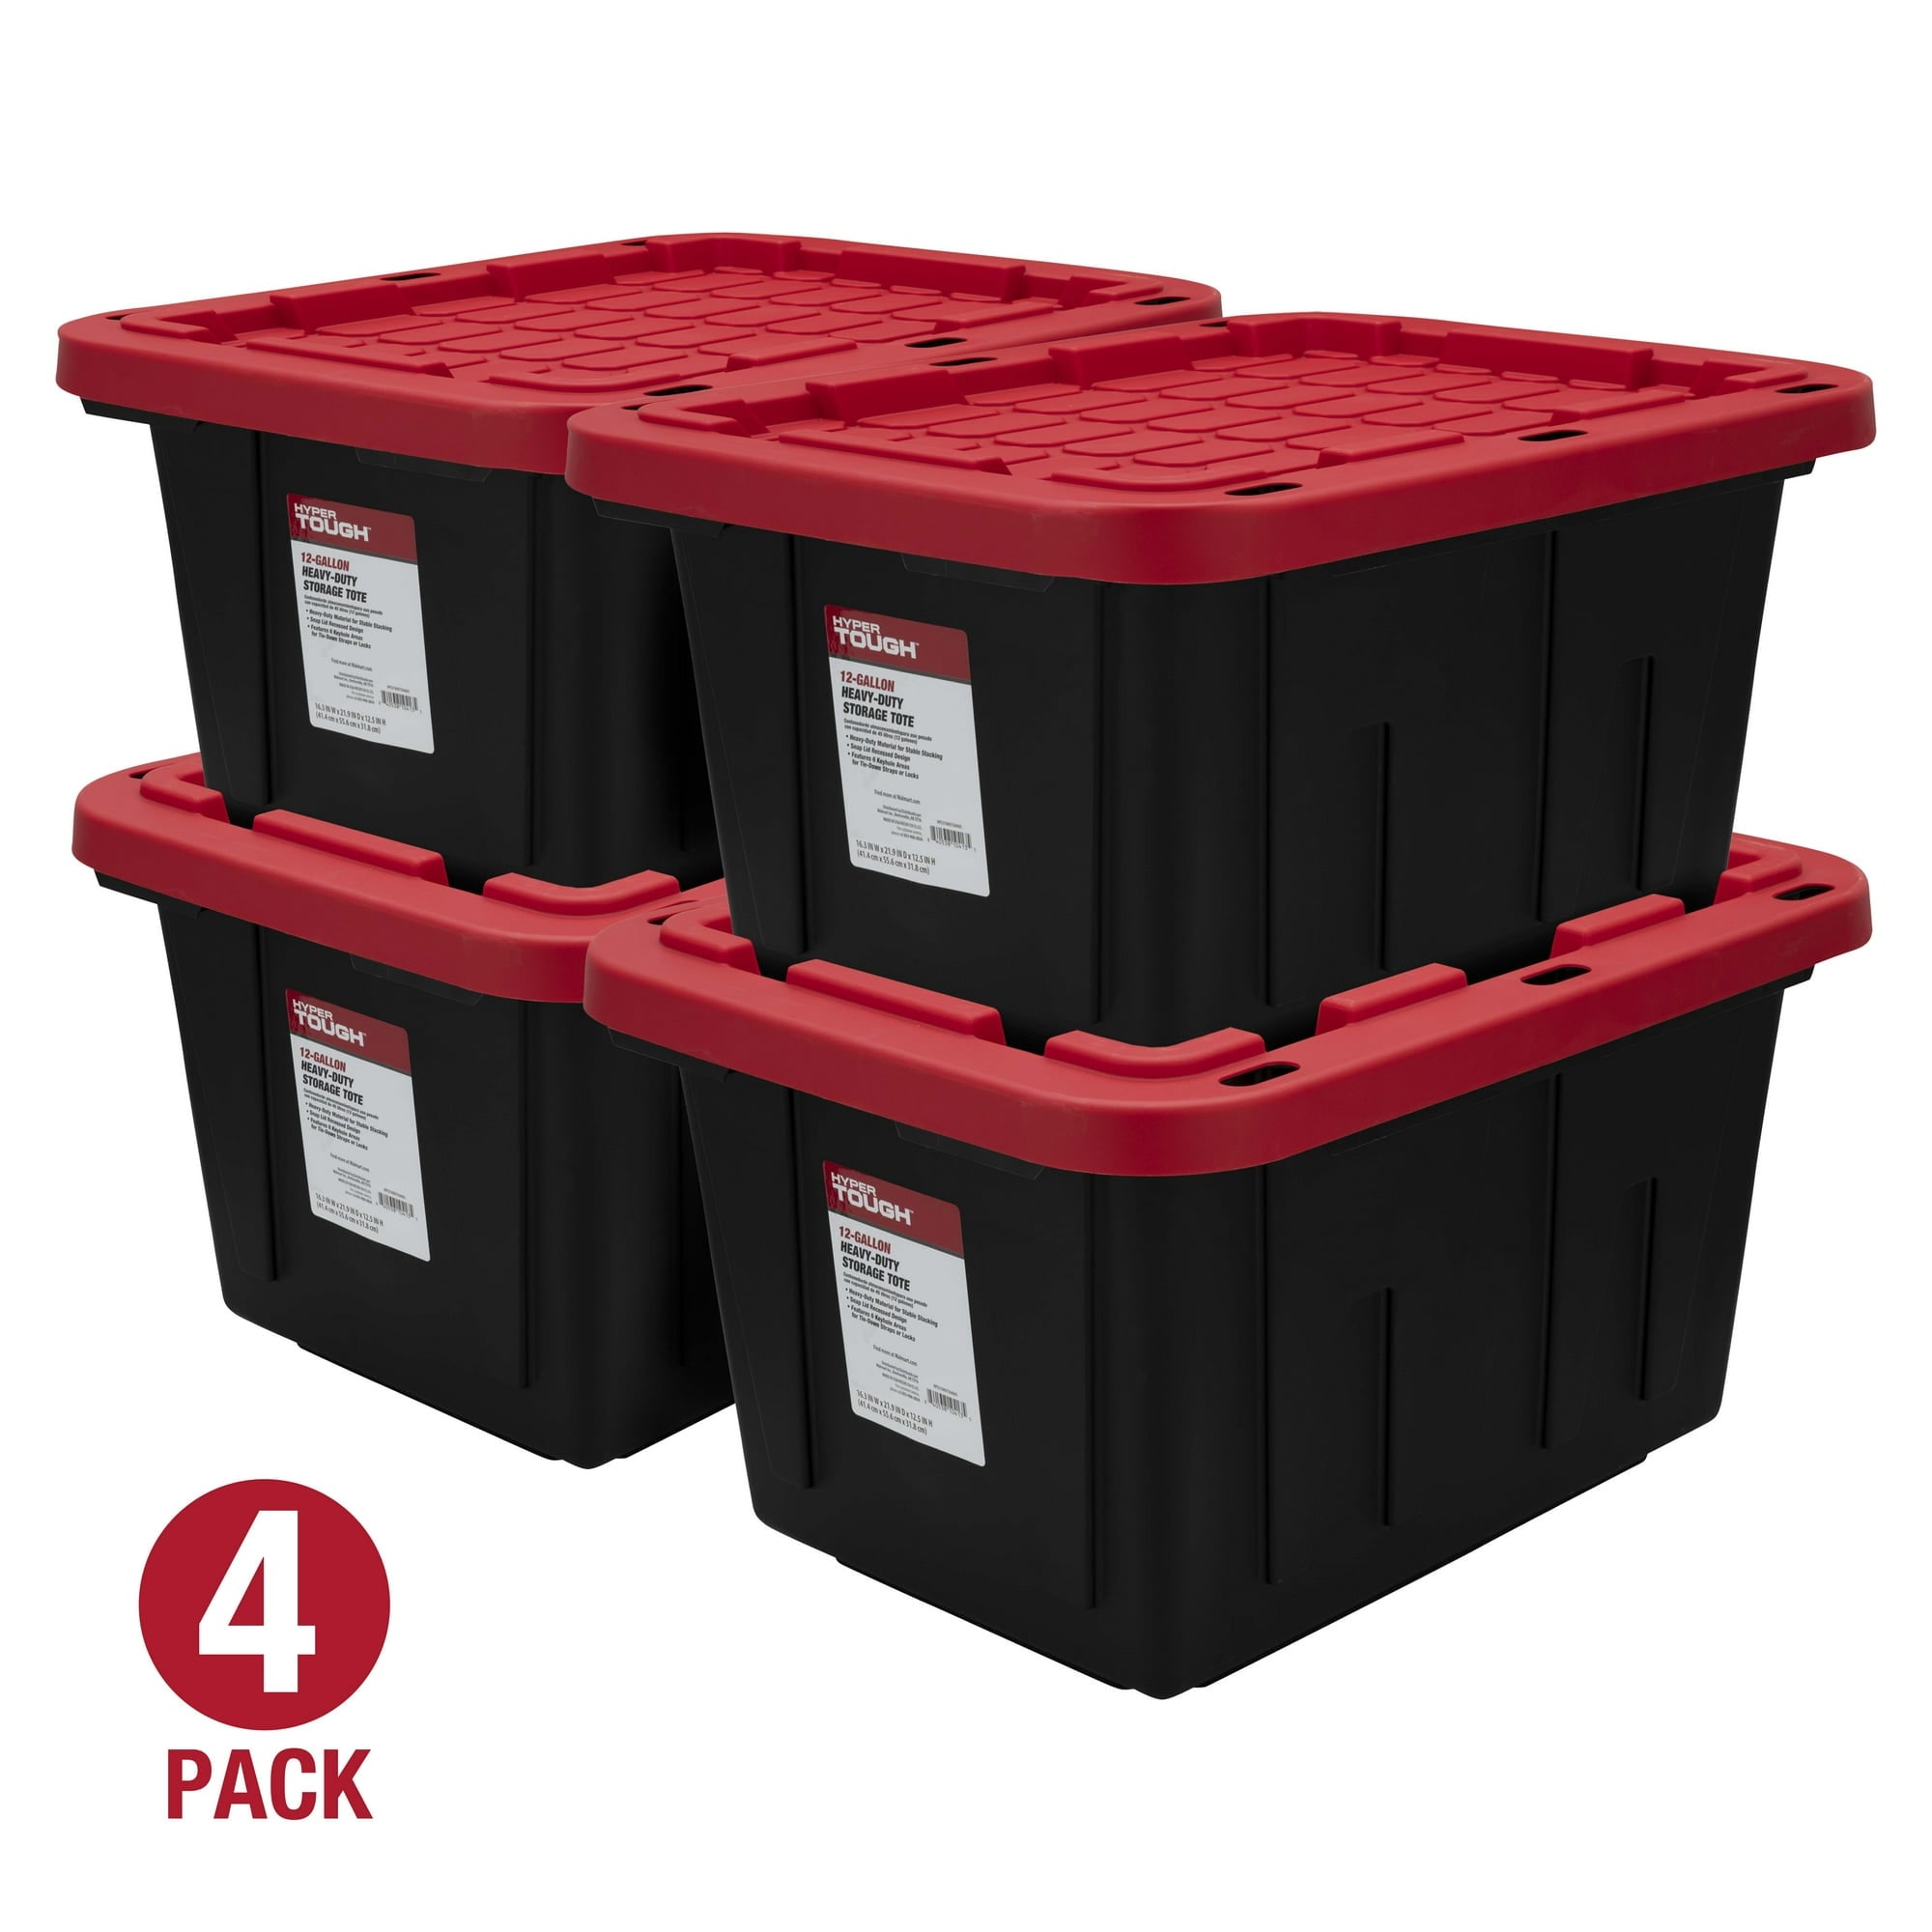 Homz Tough Storage Tote 27-Gallon Pack of 4